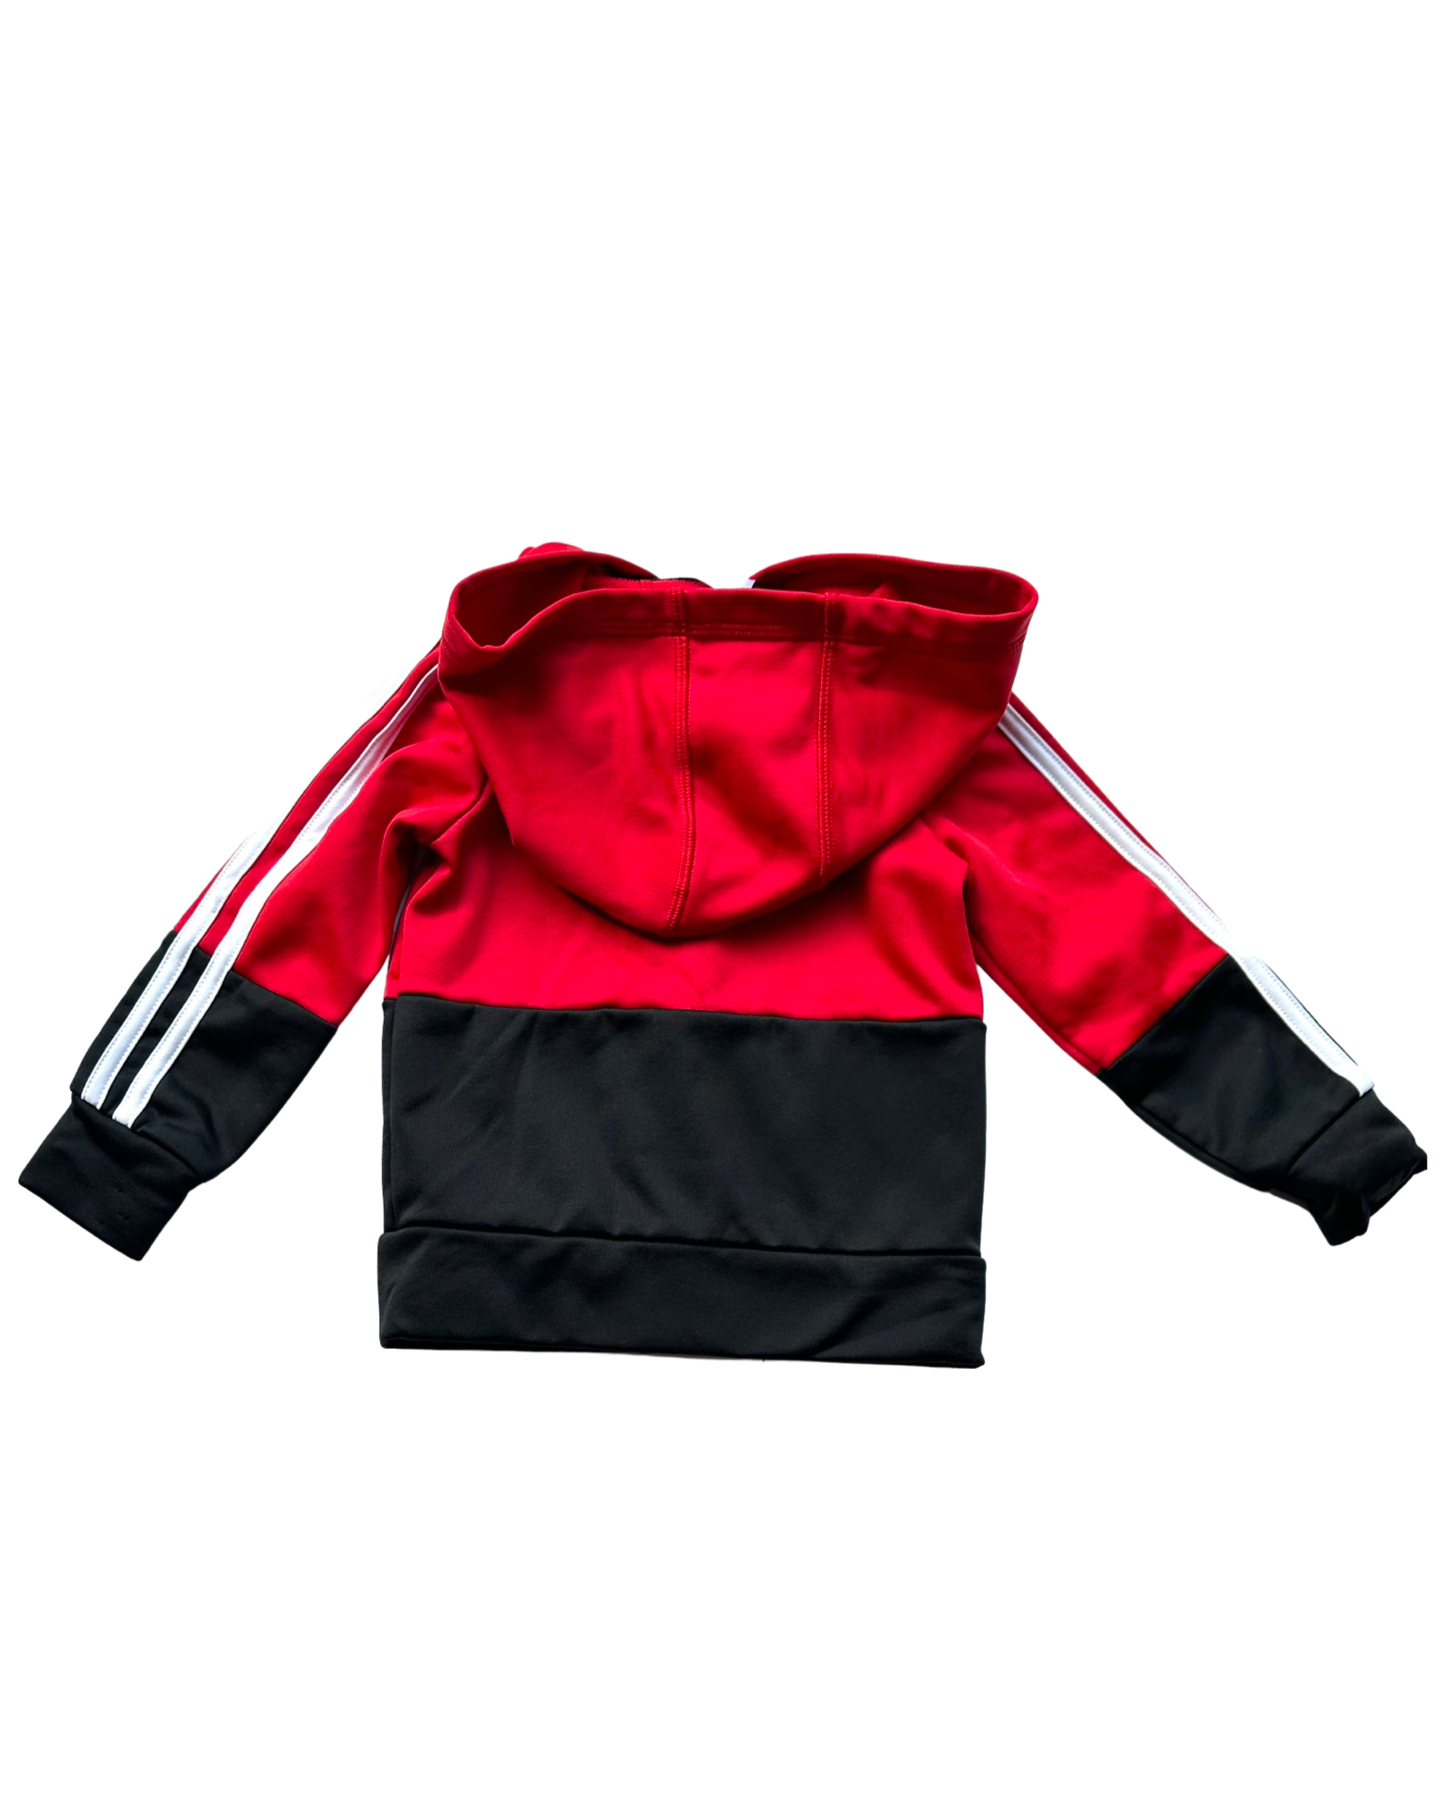 Vintage Adidas hooded track jacket in black/red (1-2yrs)